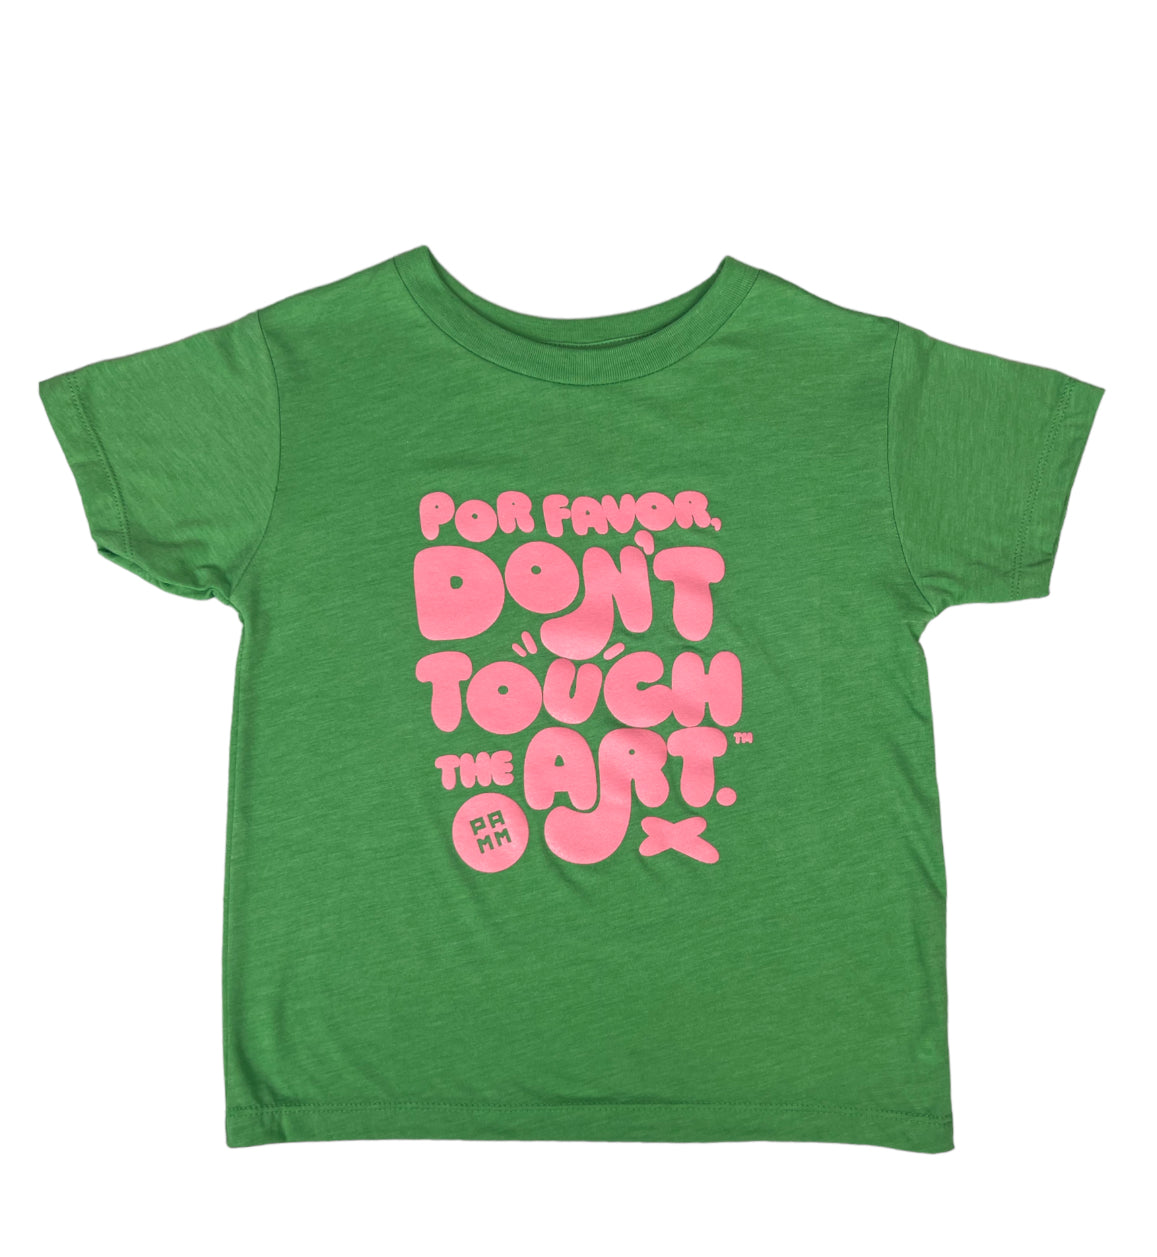 Por favor, don’t touch the art™ T-Shirt (Toddler)